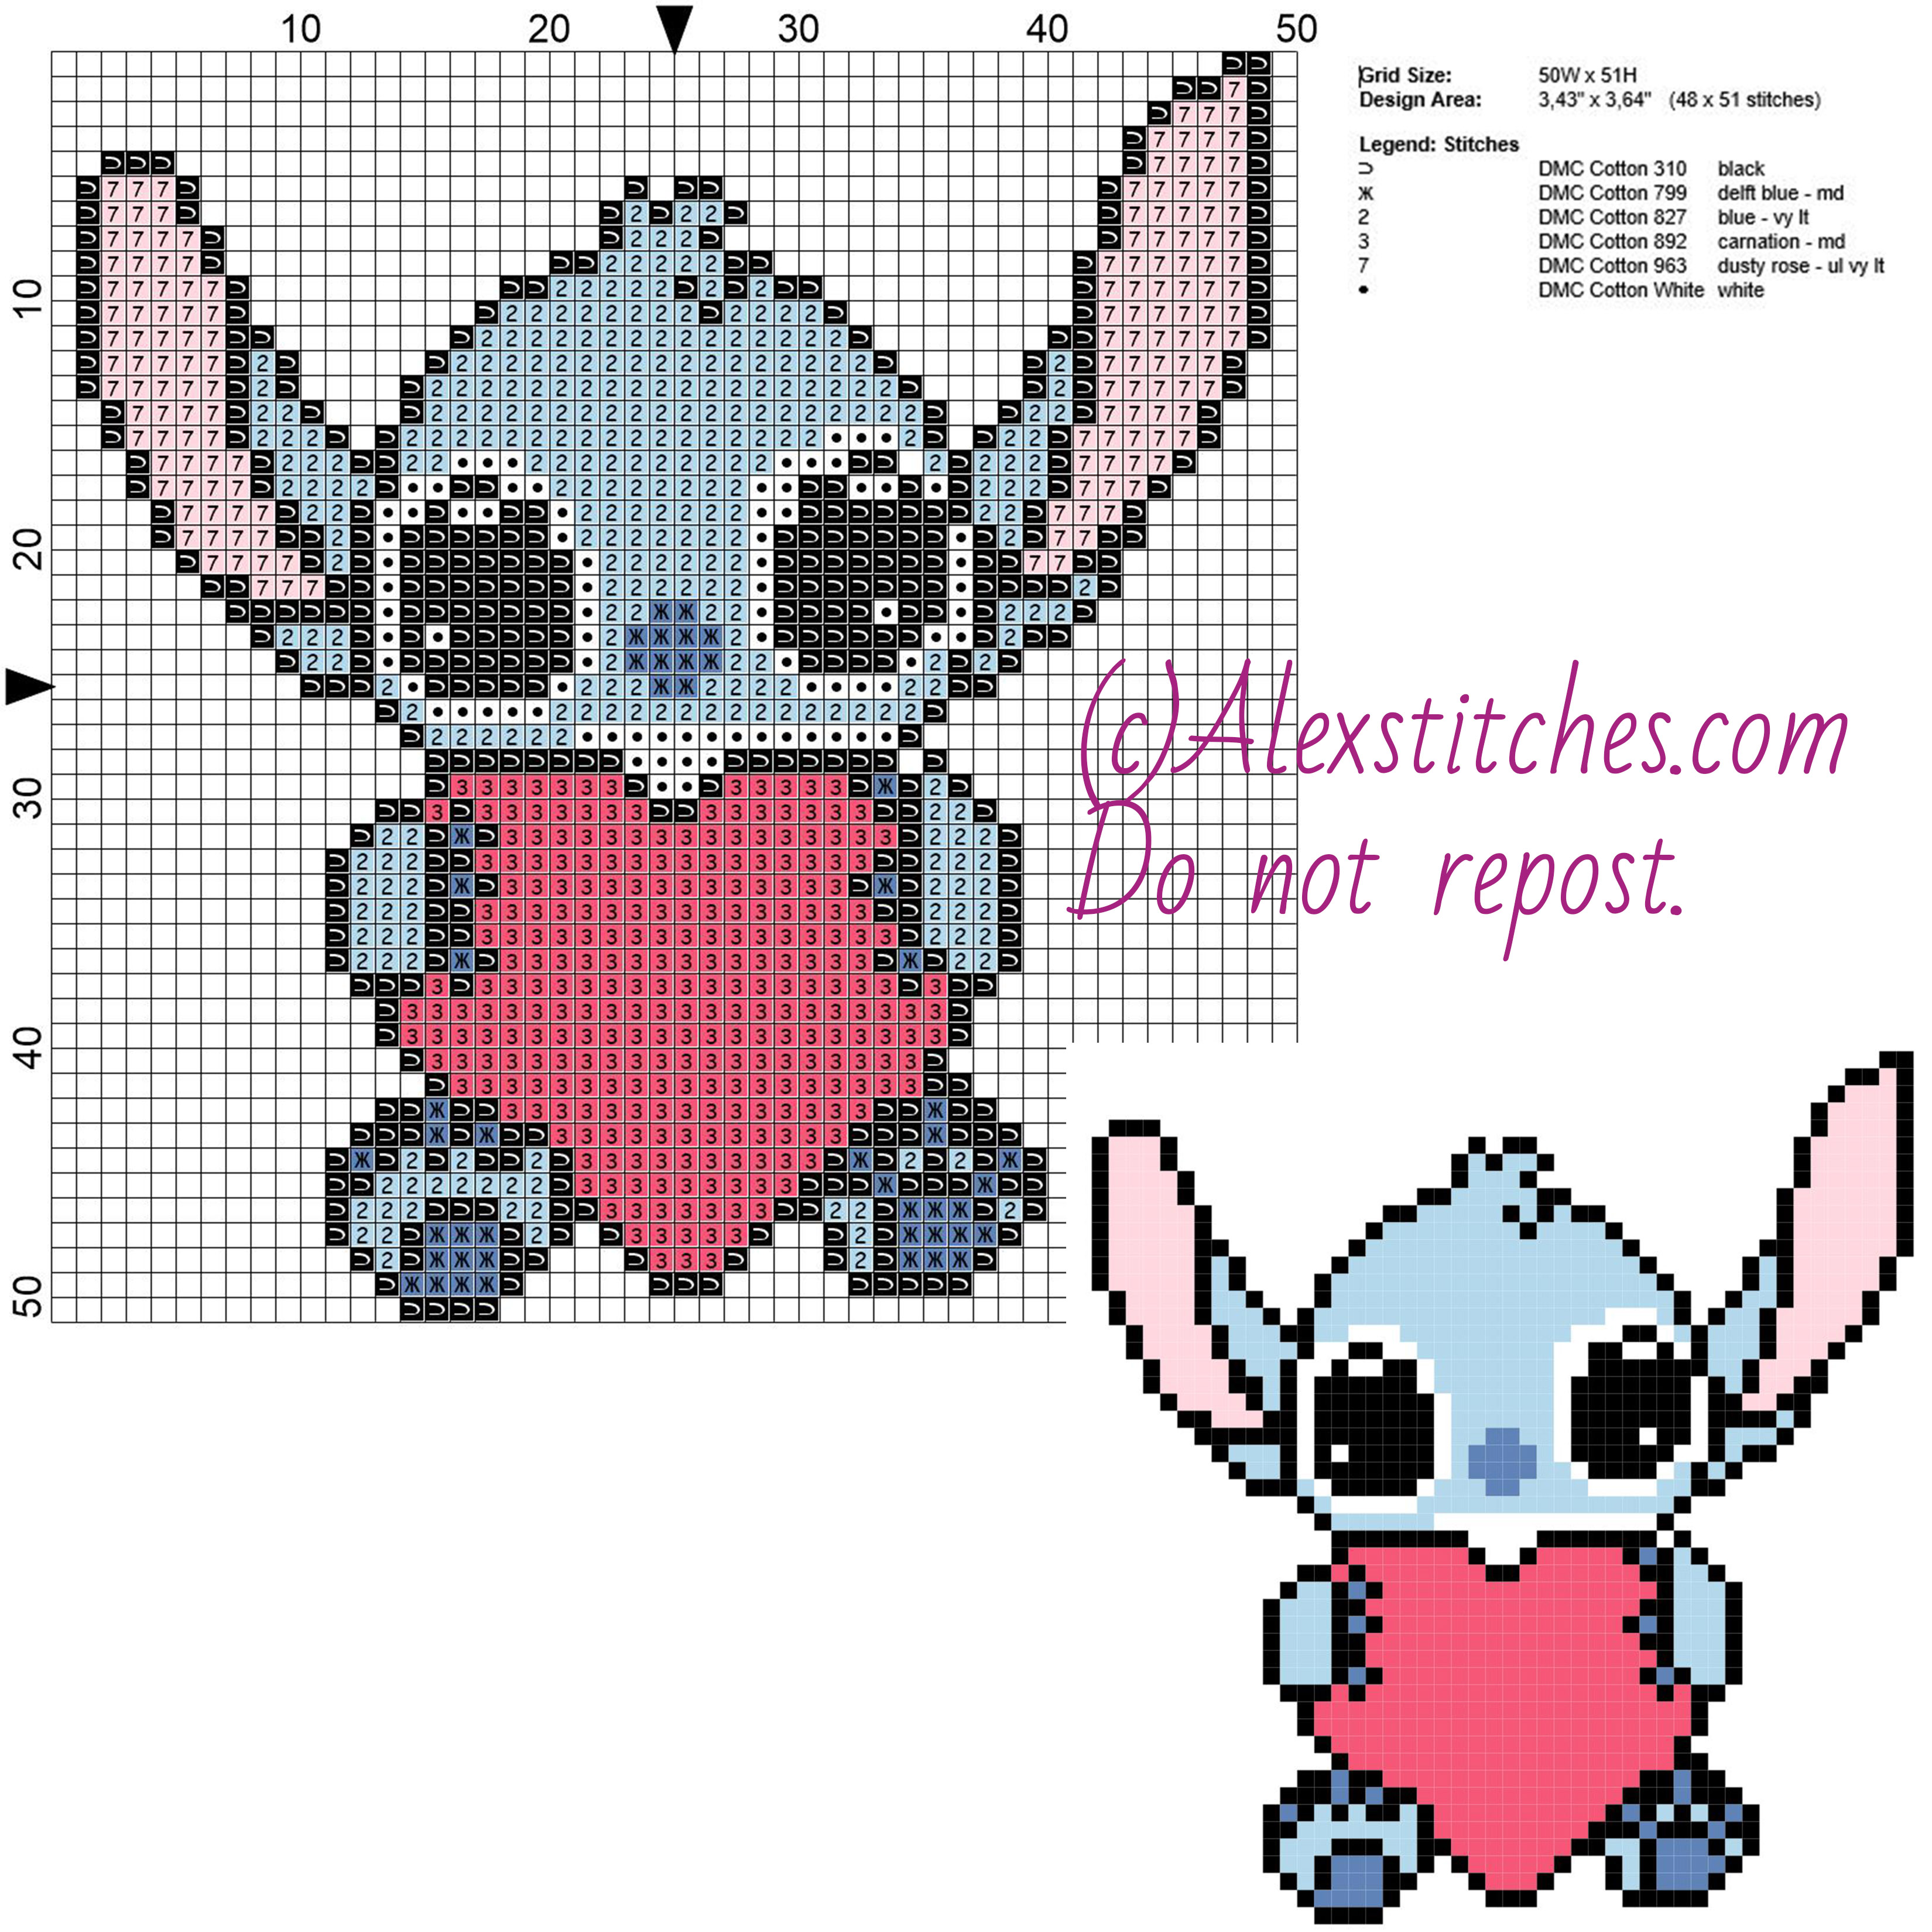 Little Stitch with heart free Disney cross stitch pattern 50x51 6 colors